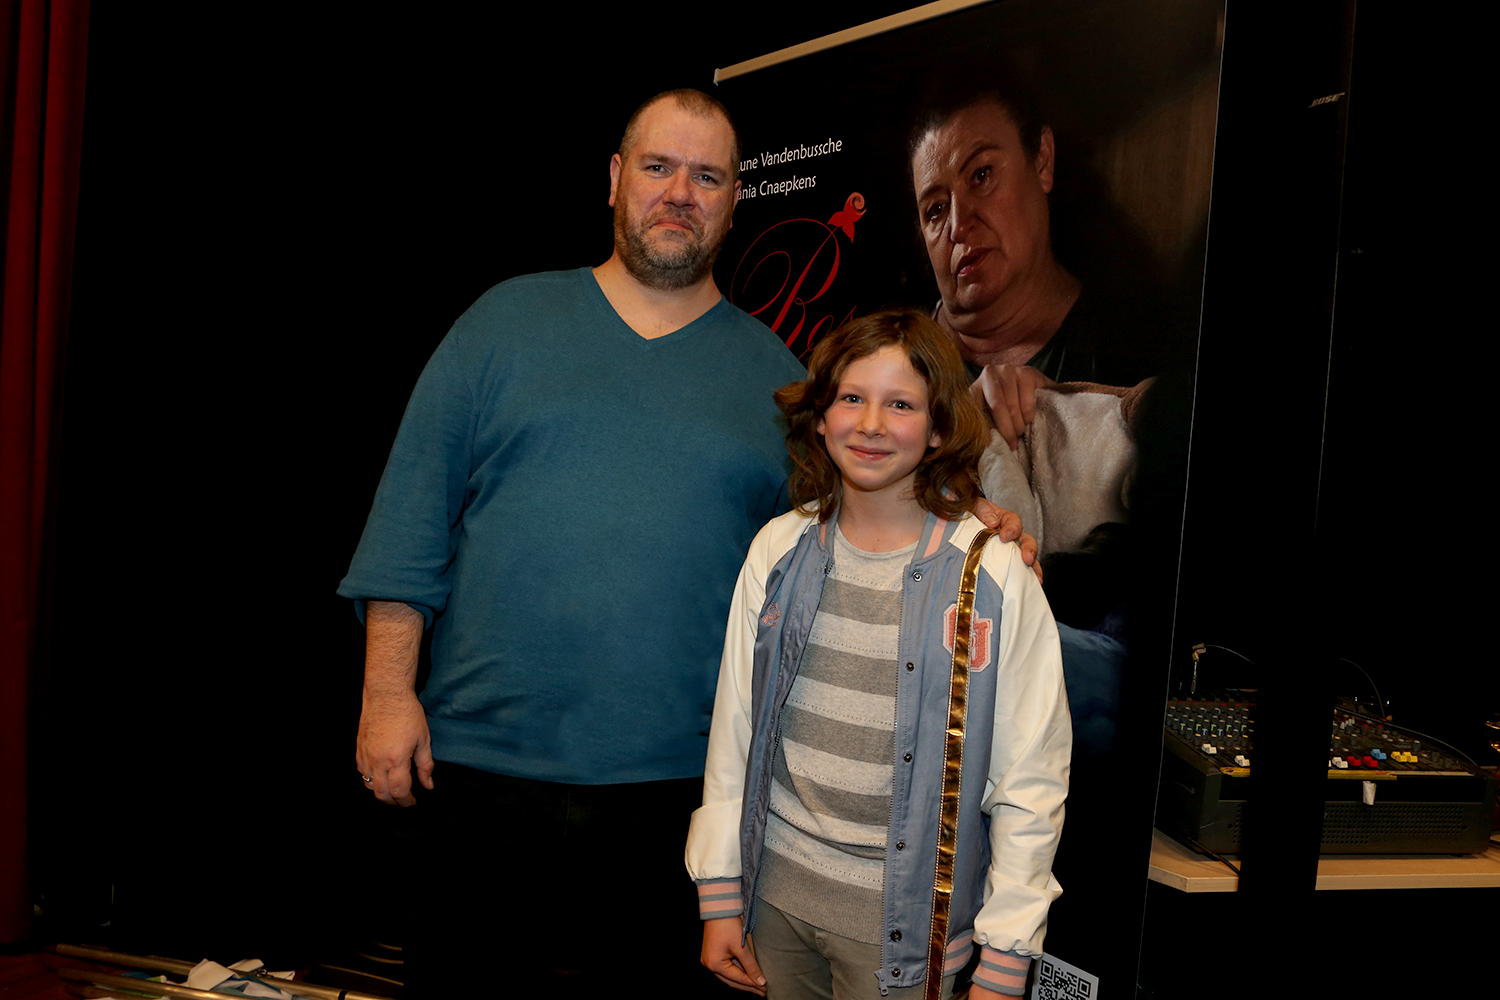 Curt Coekaerts with Rune Vandenbussche at the premiere of 